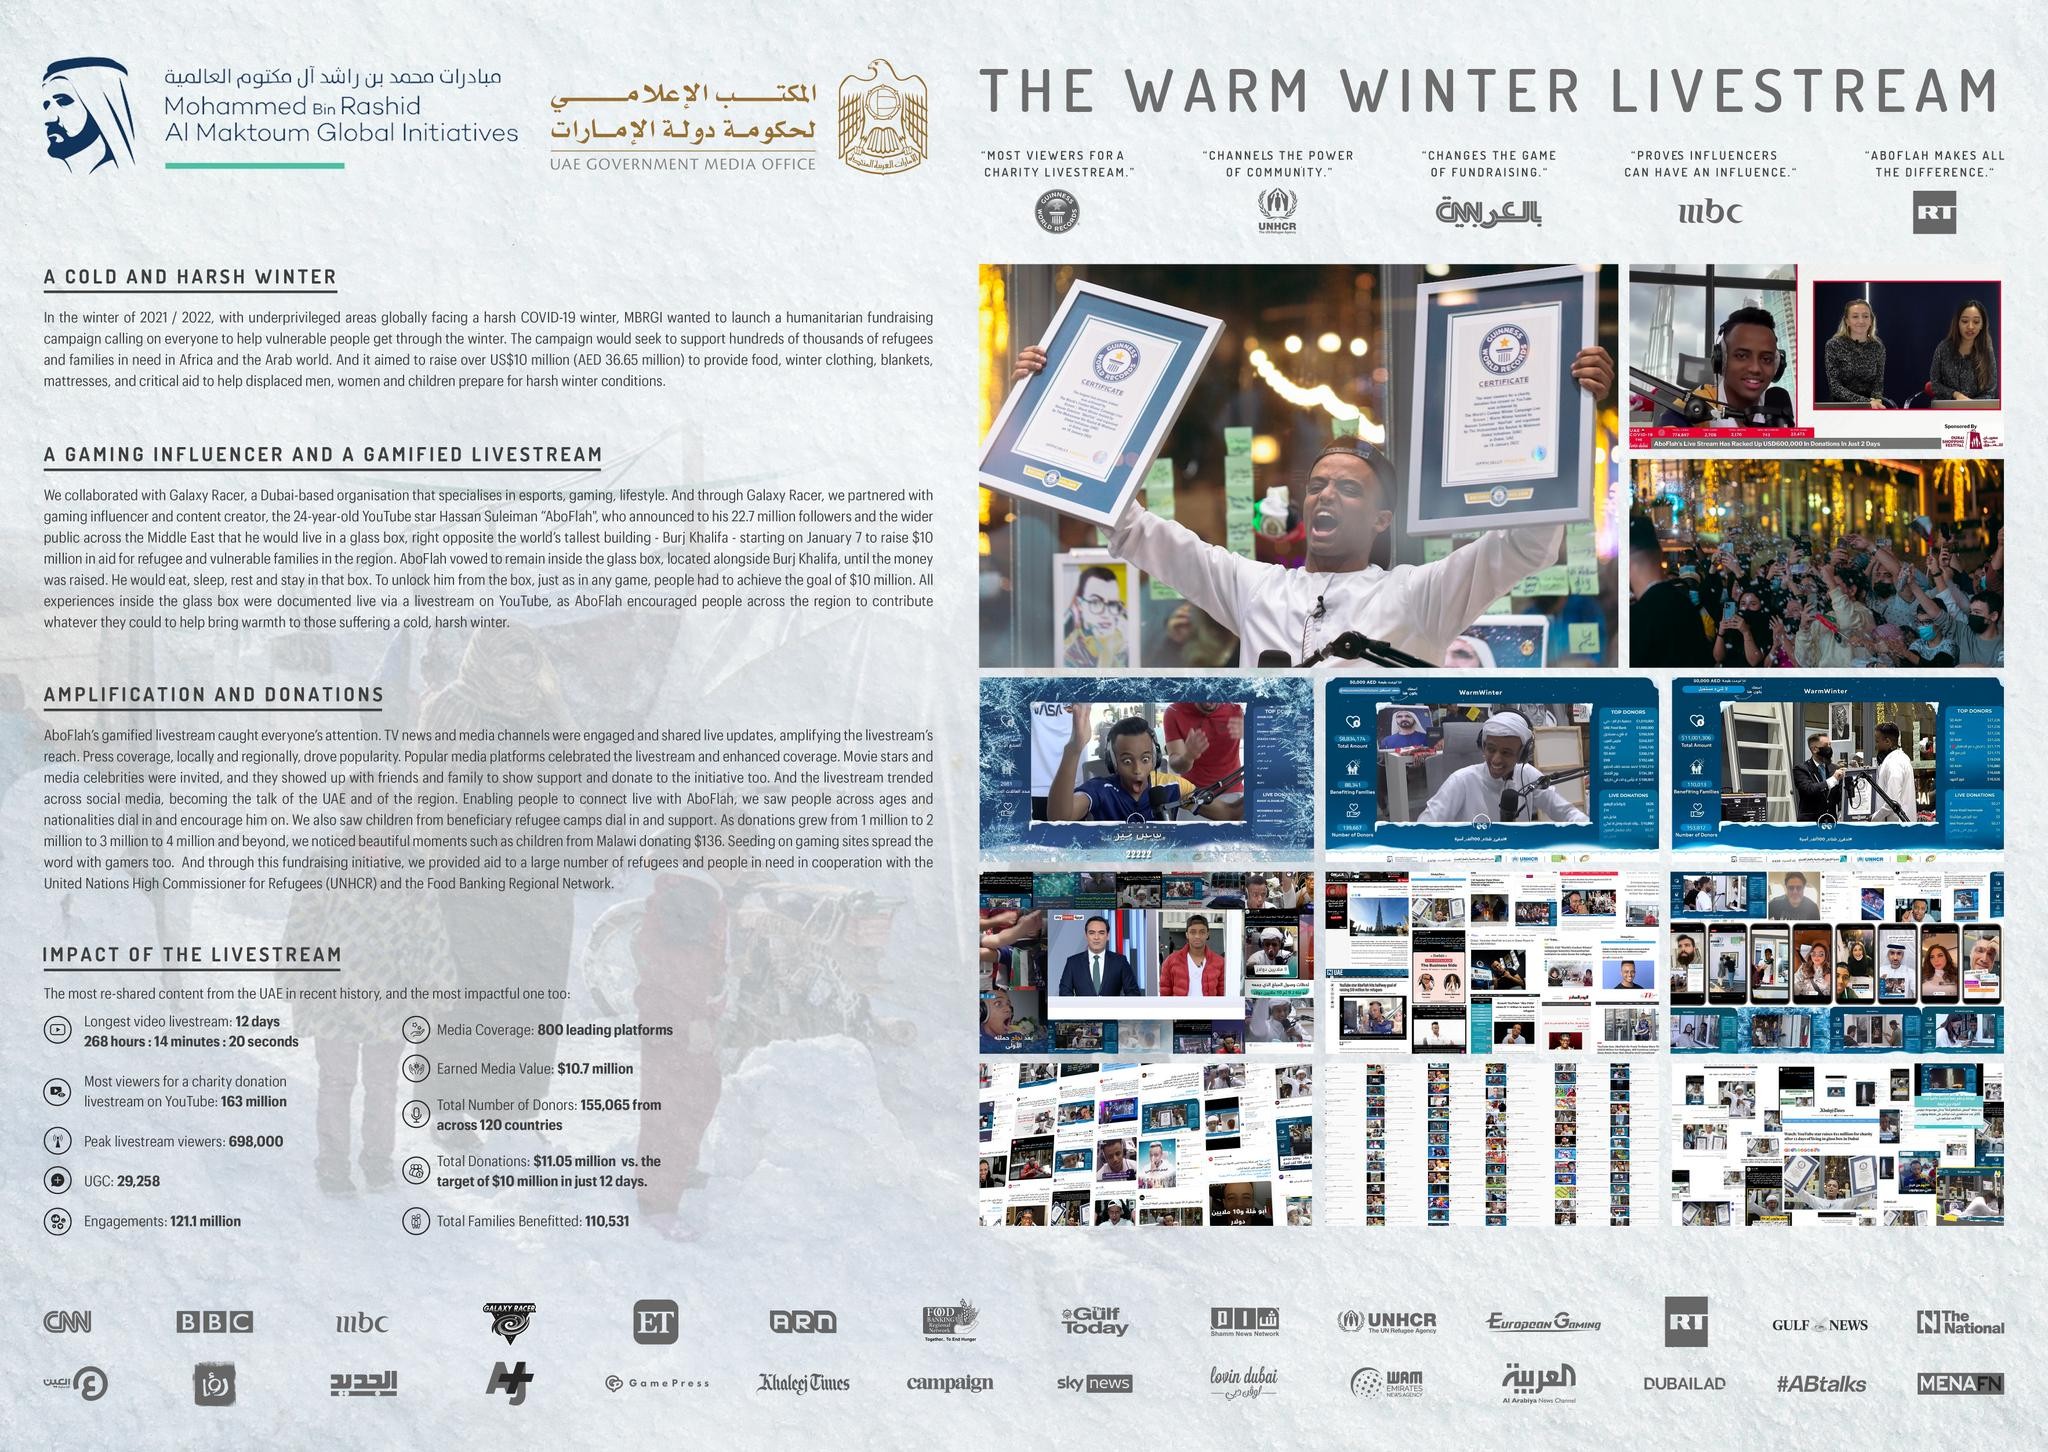 The Warm Winter Livestream